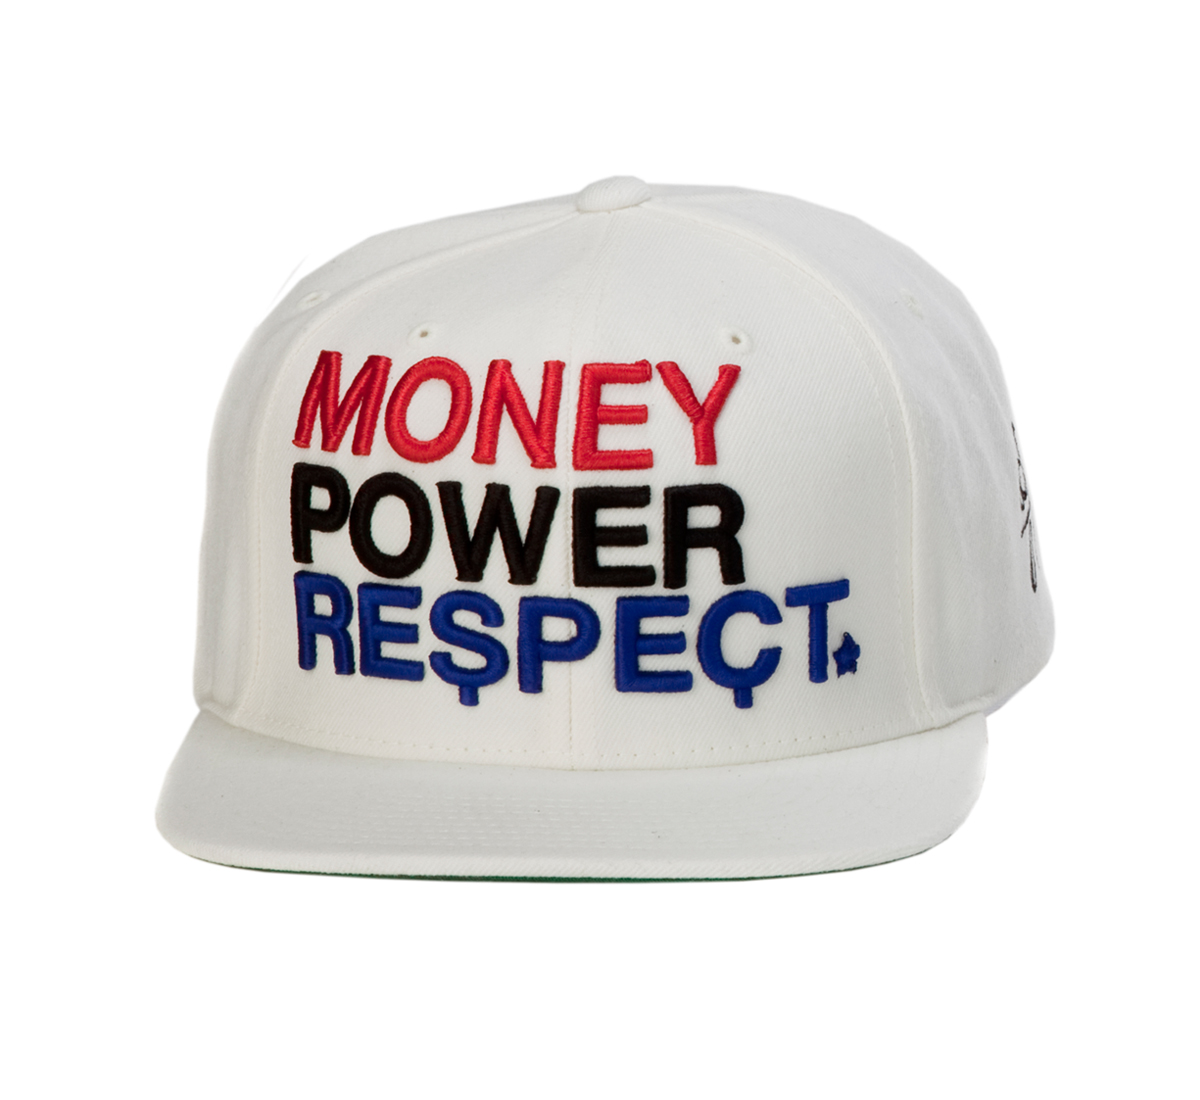 Money Power respect TM силуэт. Respect. Футболка money Power respect. Money in cap.